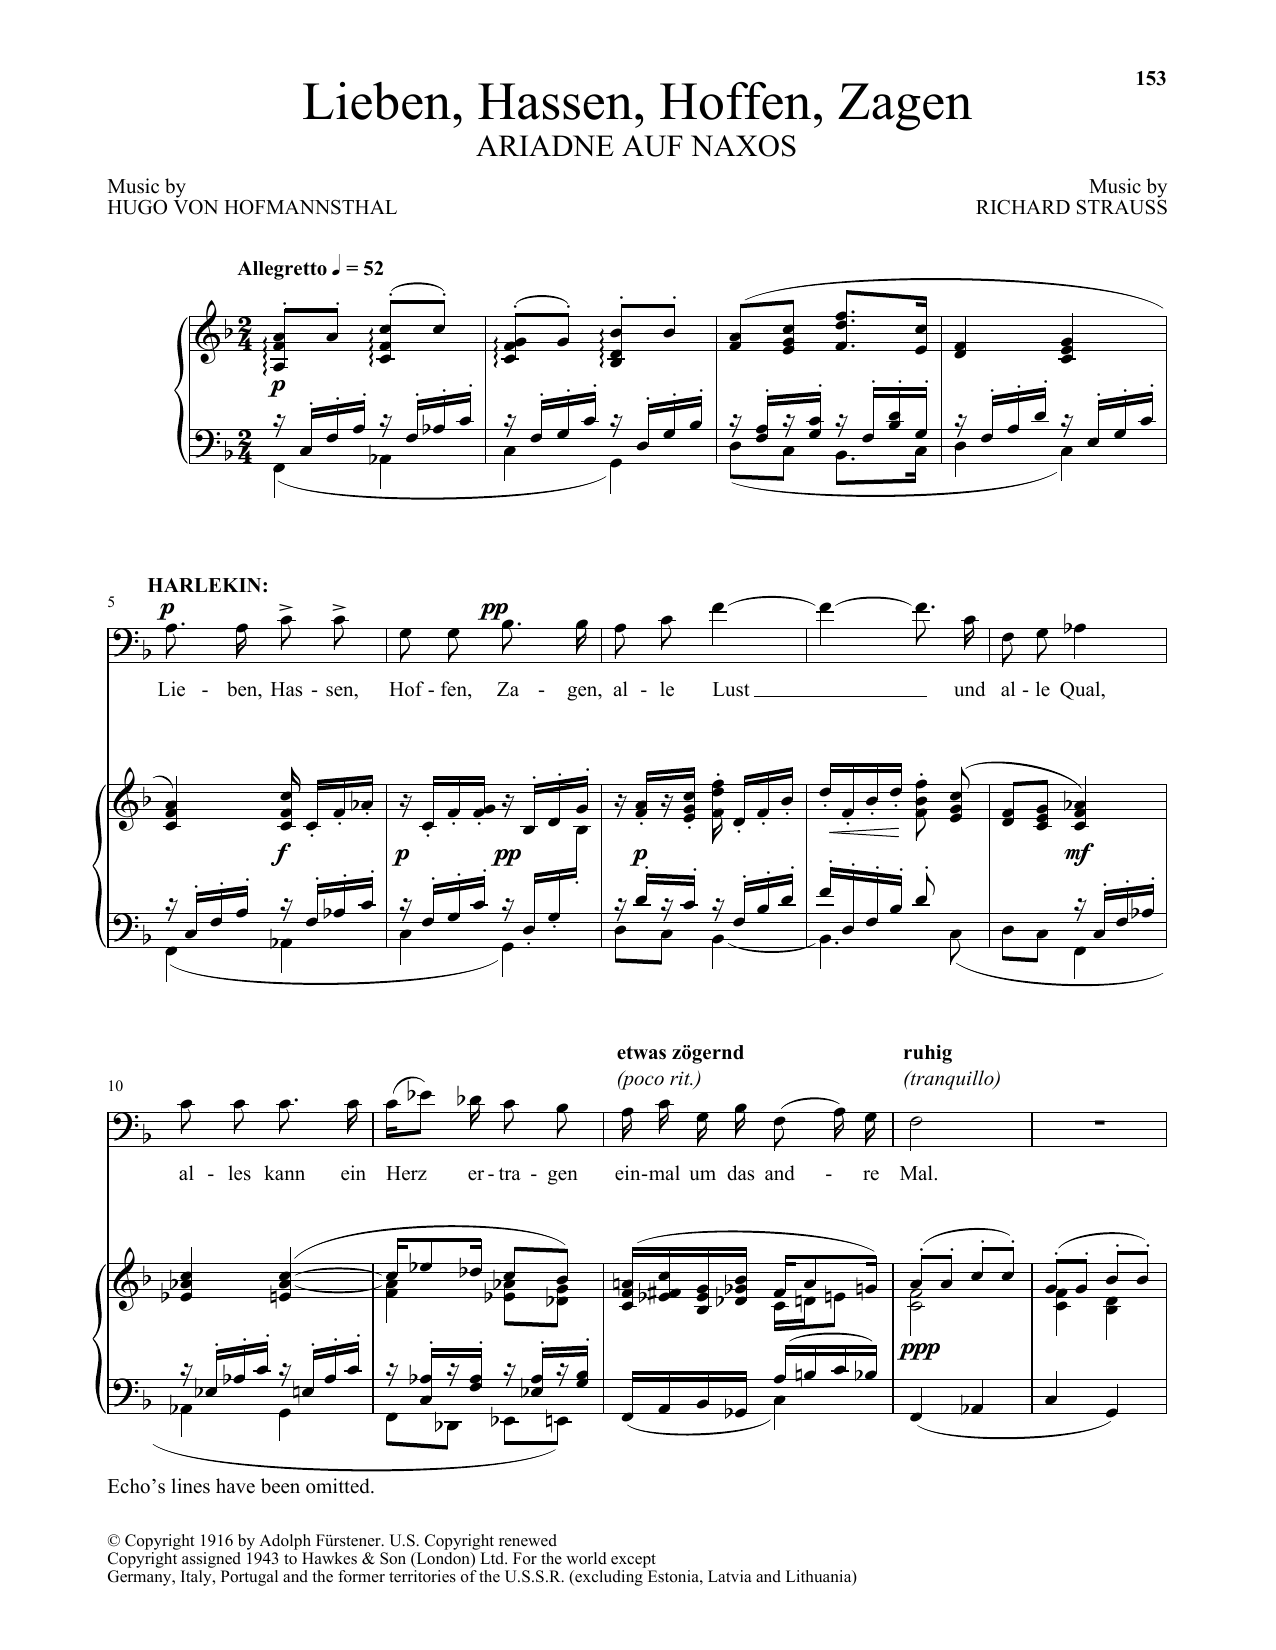 Richard Strauss Lieben, Hassen, Hoffen, Zagen Sheet Music Notes & Chords for Piano & Vocal - Download or Print PDF